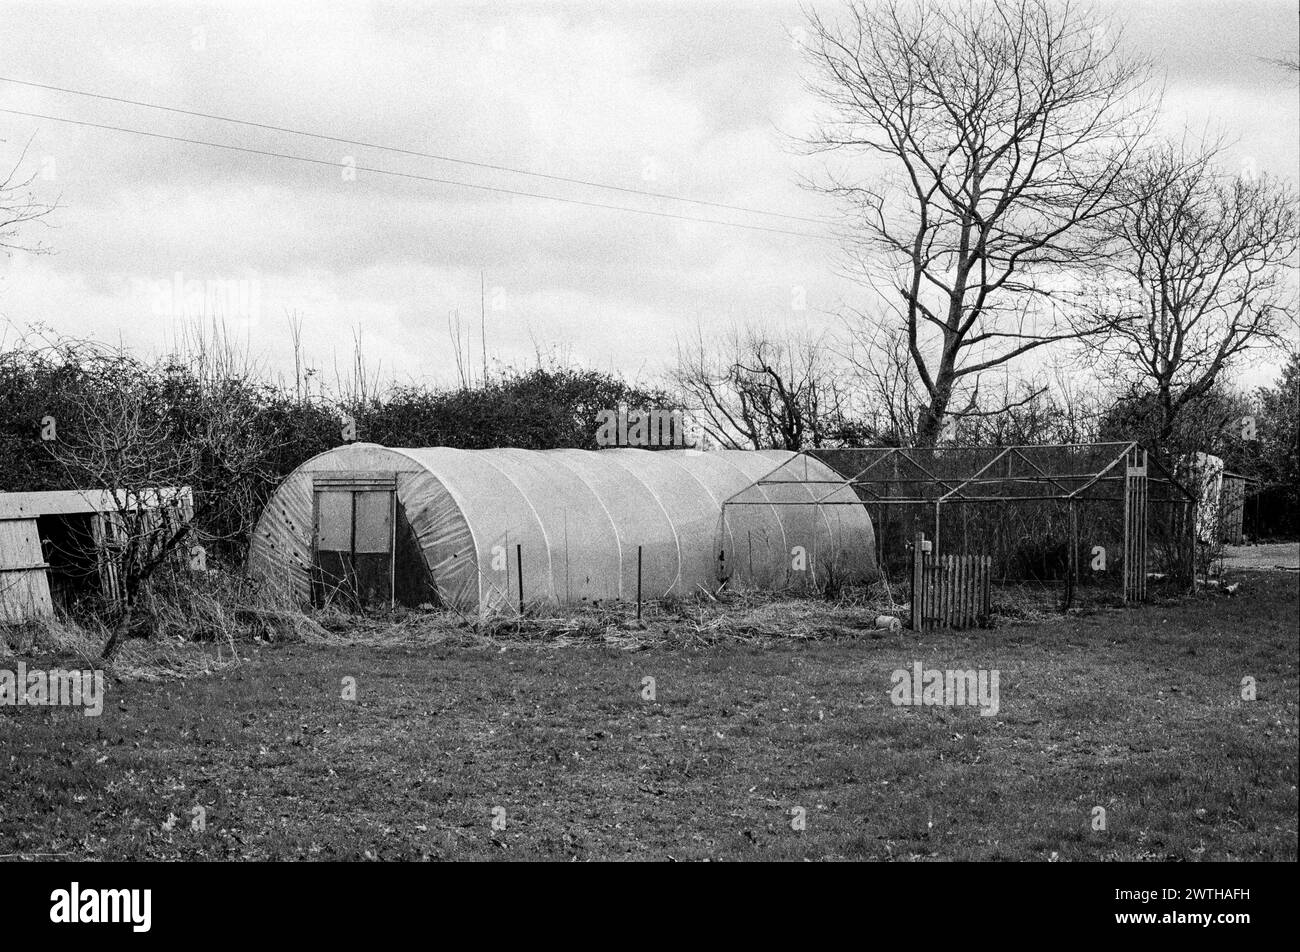 Polytunnel greenhouse, Medstead, Hampshire, England, United Kingdom. Stock Photo